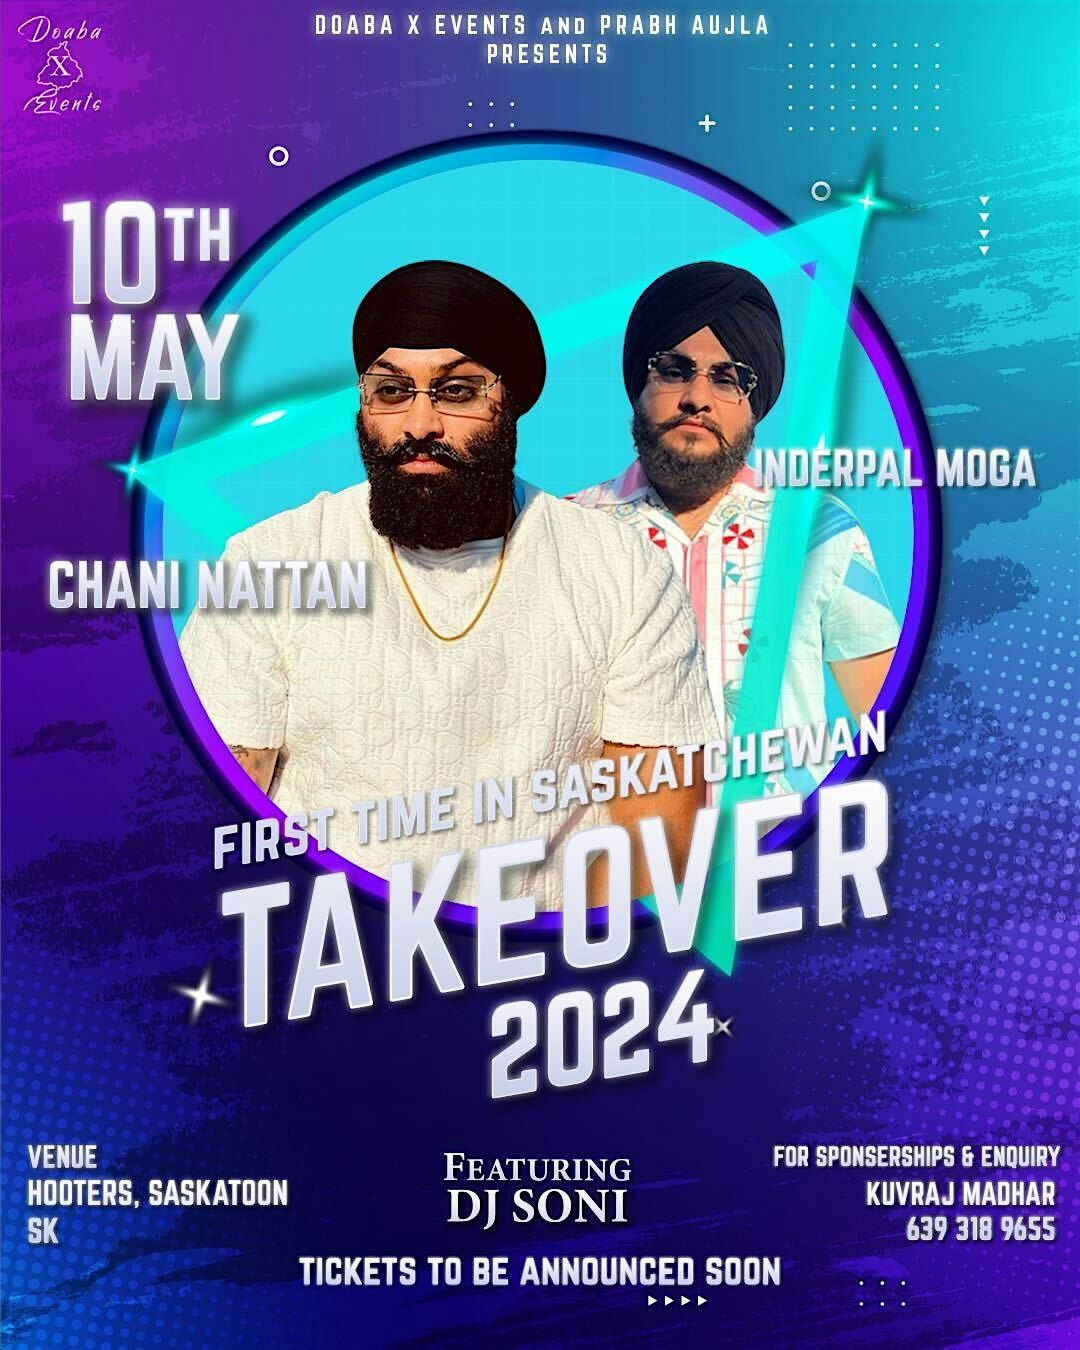 Takeover 2024 - Chani Nattan & Inderpal Moga